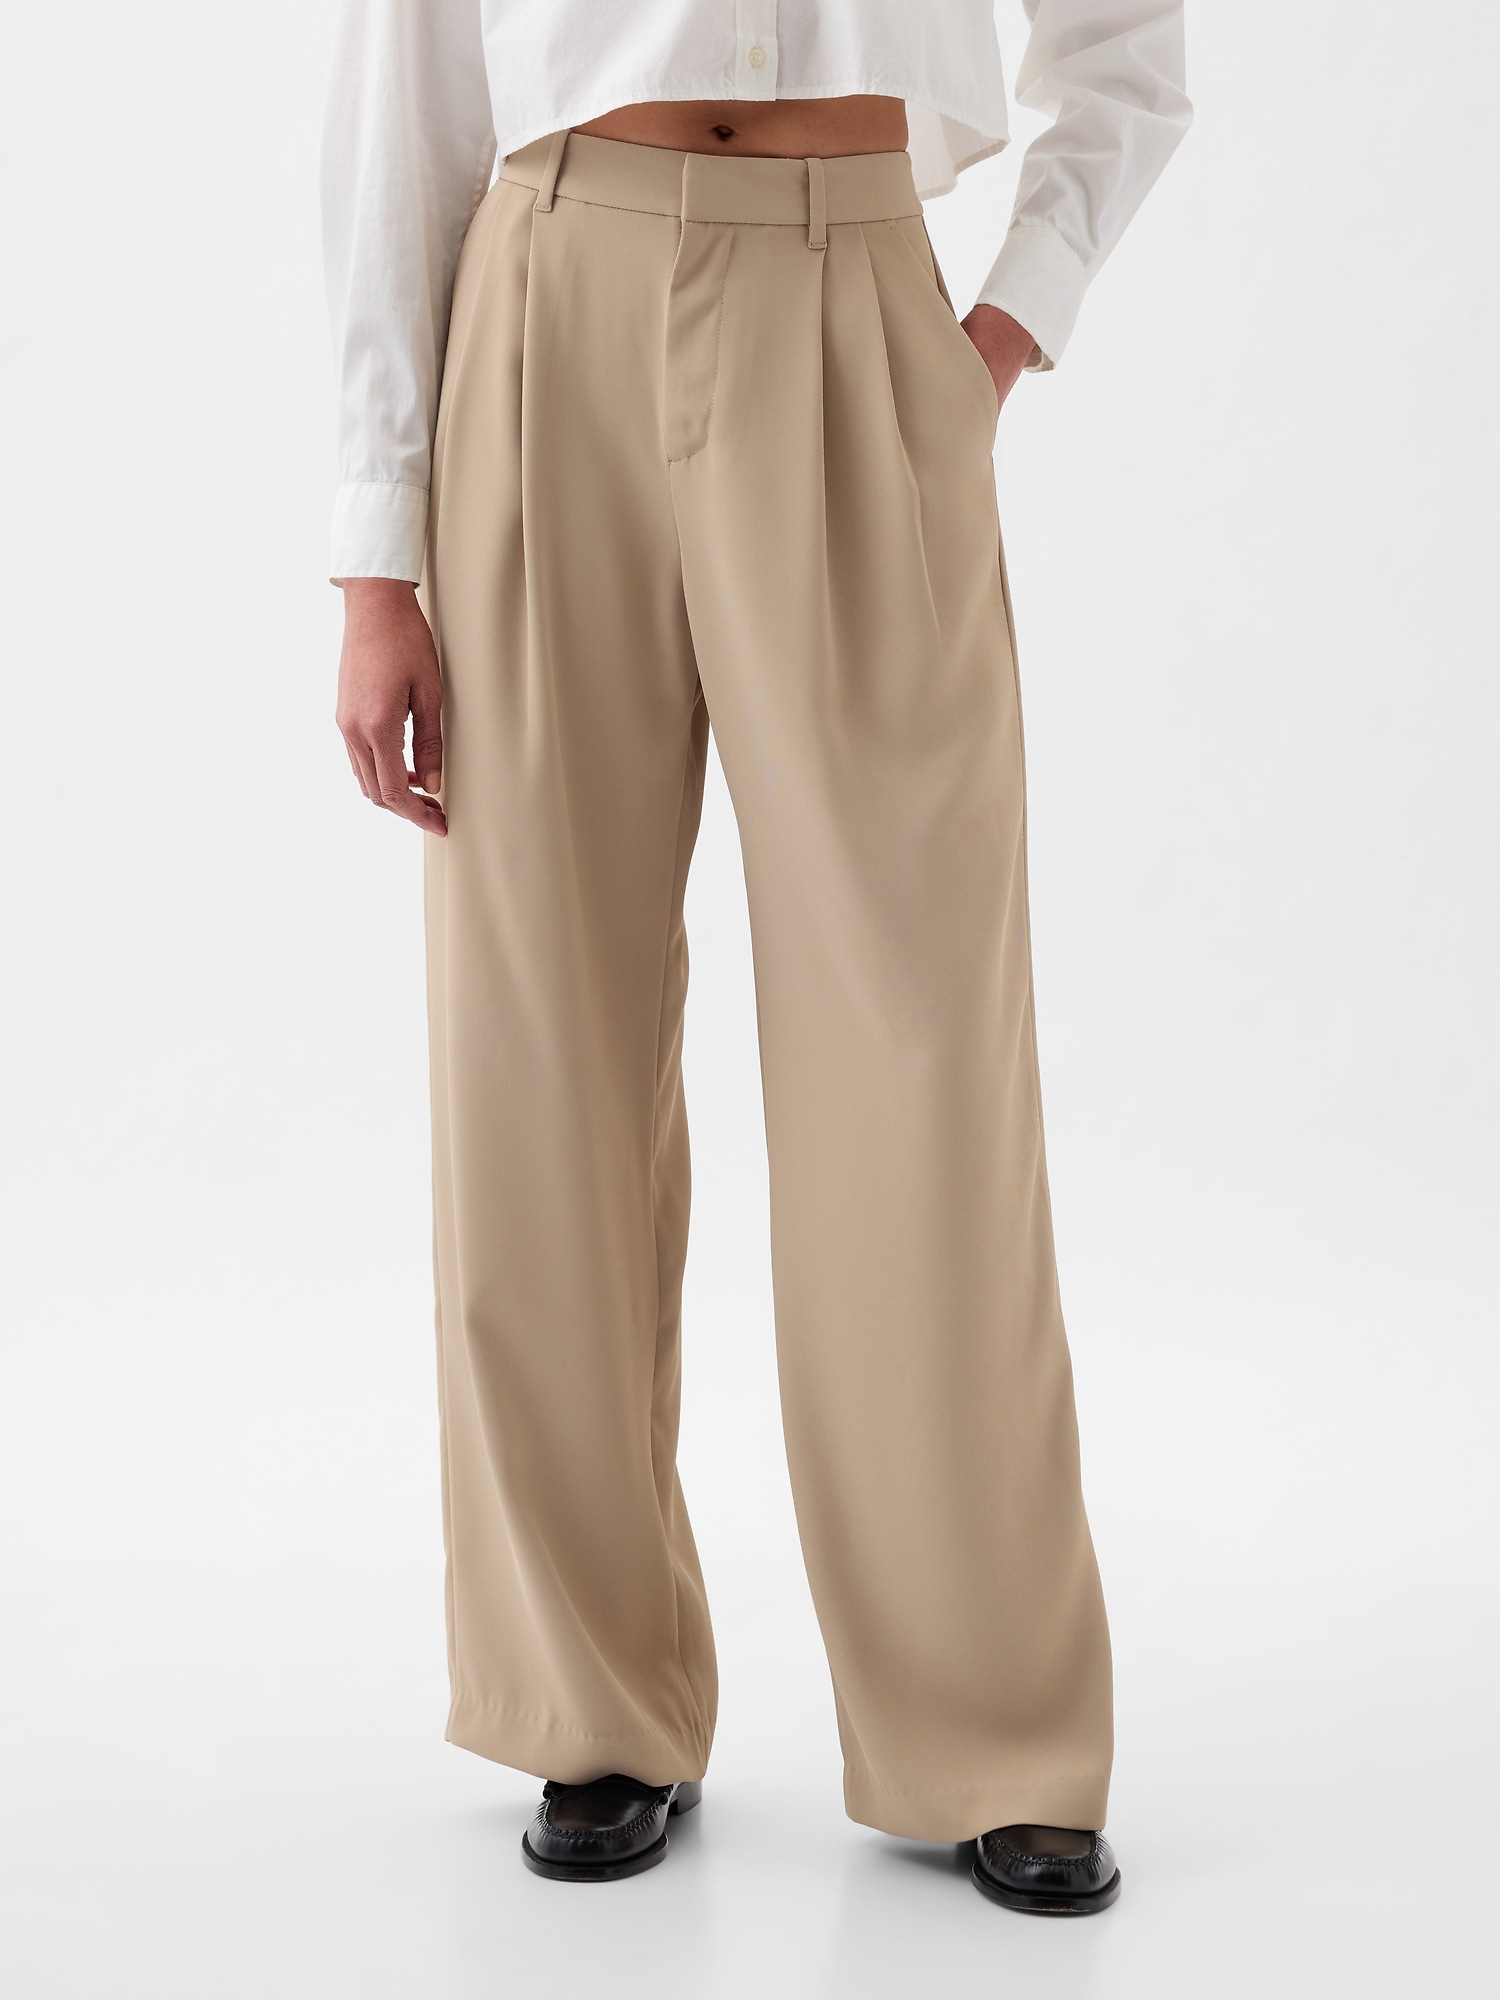 Buy Pleated Women Pants Vintage 90s Trousers High Rise Pants Suit